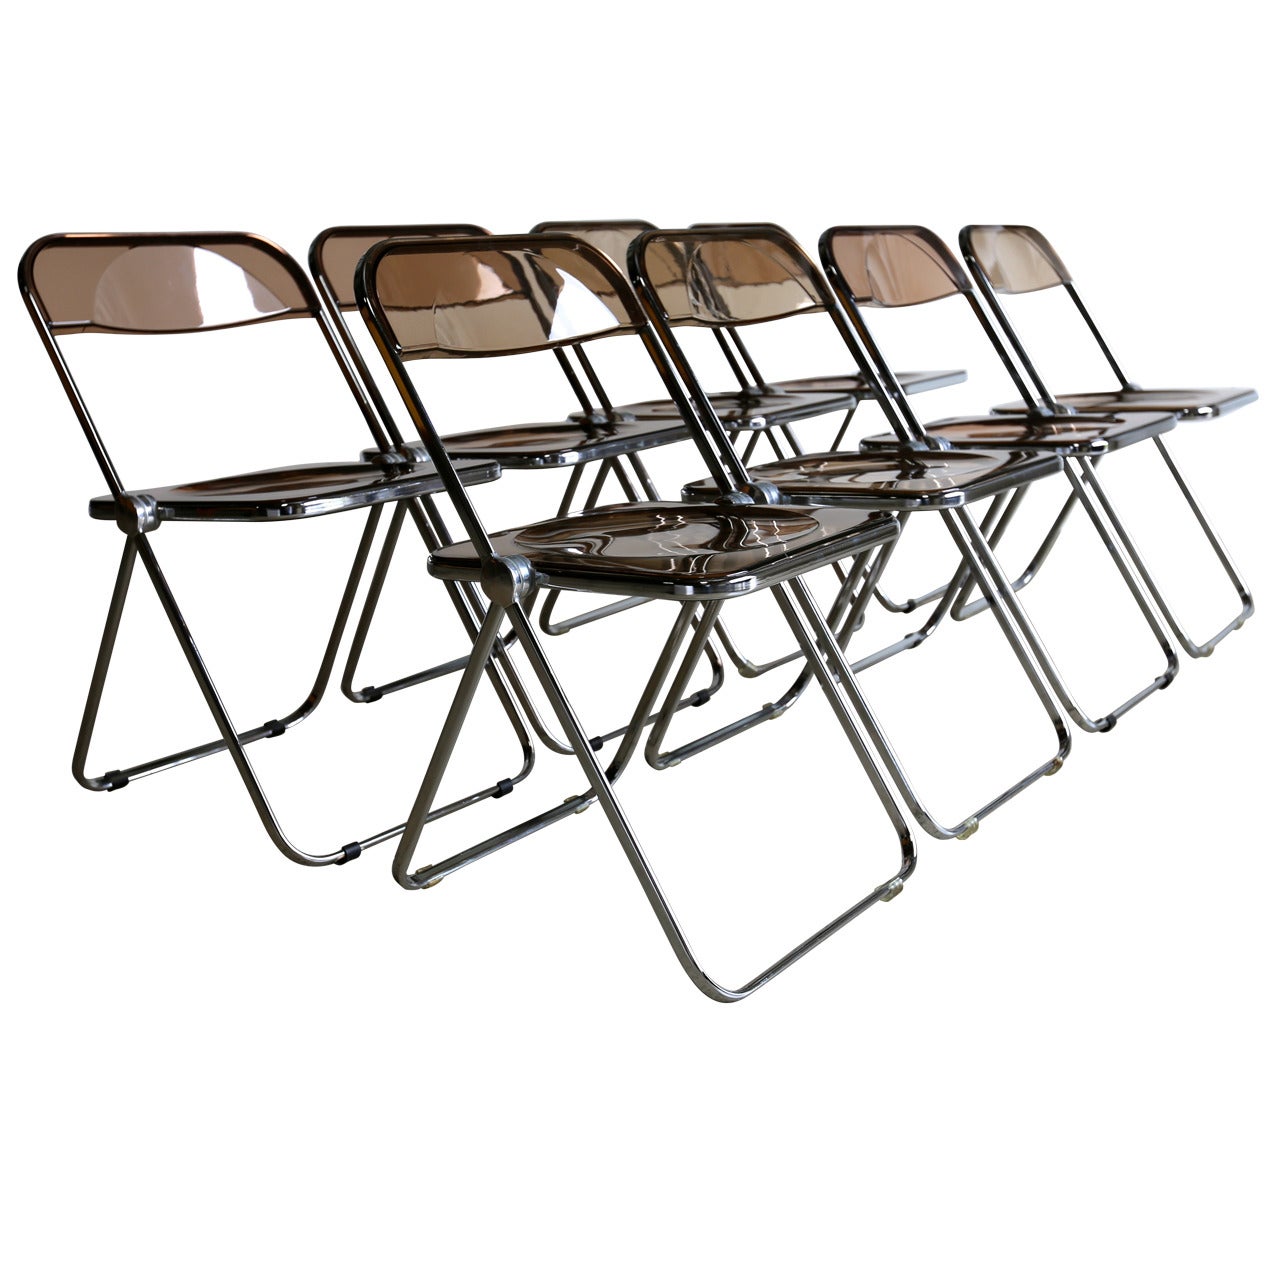 Set of Eight "Plia" Chairs by Giancarlo Piretti for Castelli